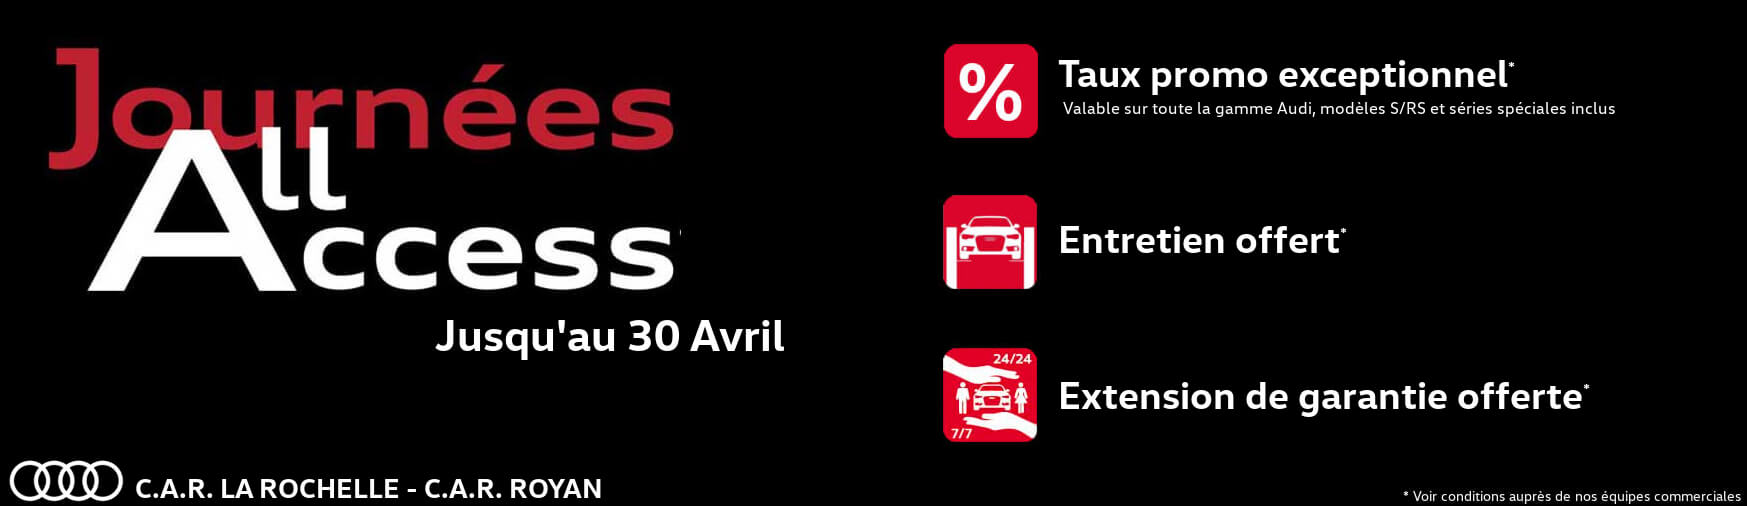 Journées Audi All Access jusqu’au 30 Avril 2018